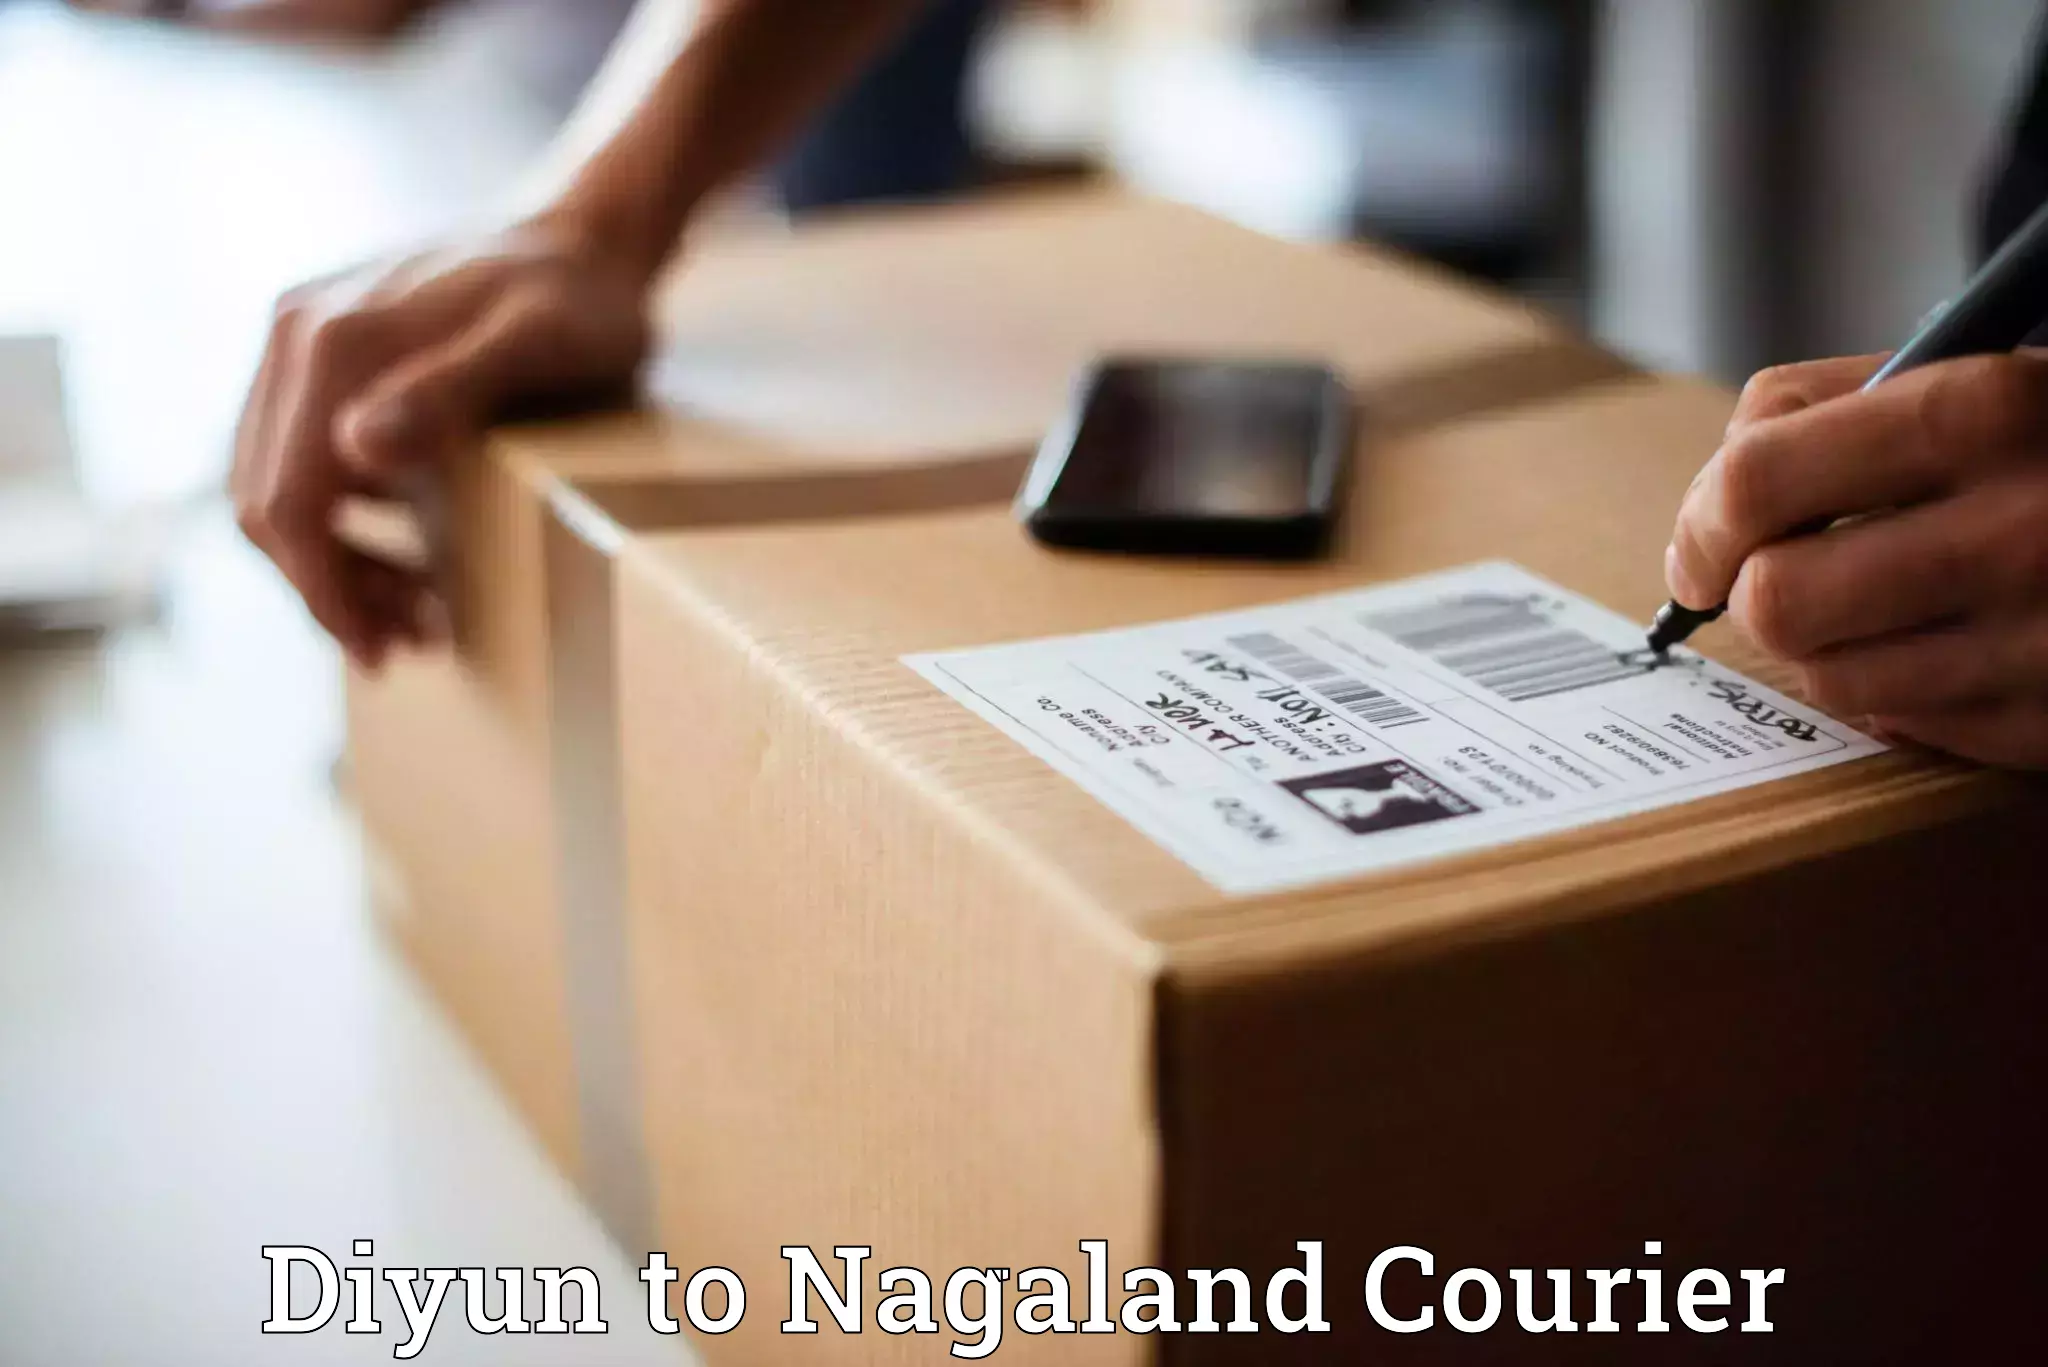 Easy return solutions Diyun to Nagaland